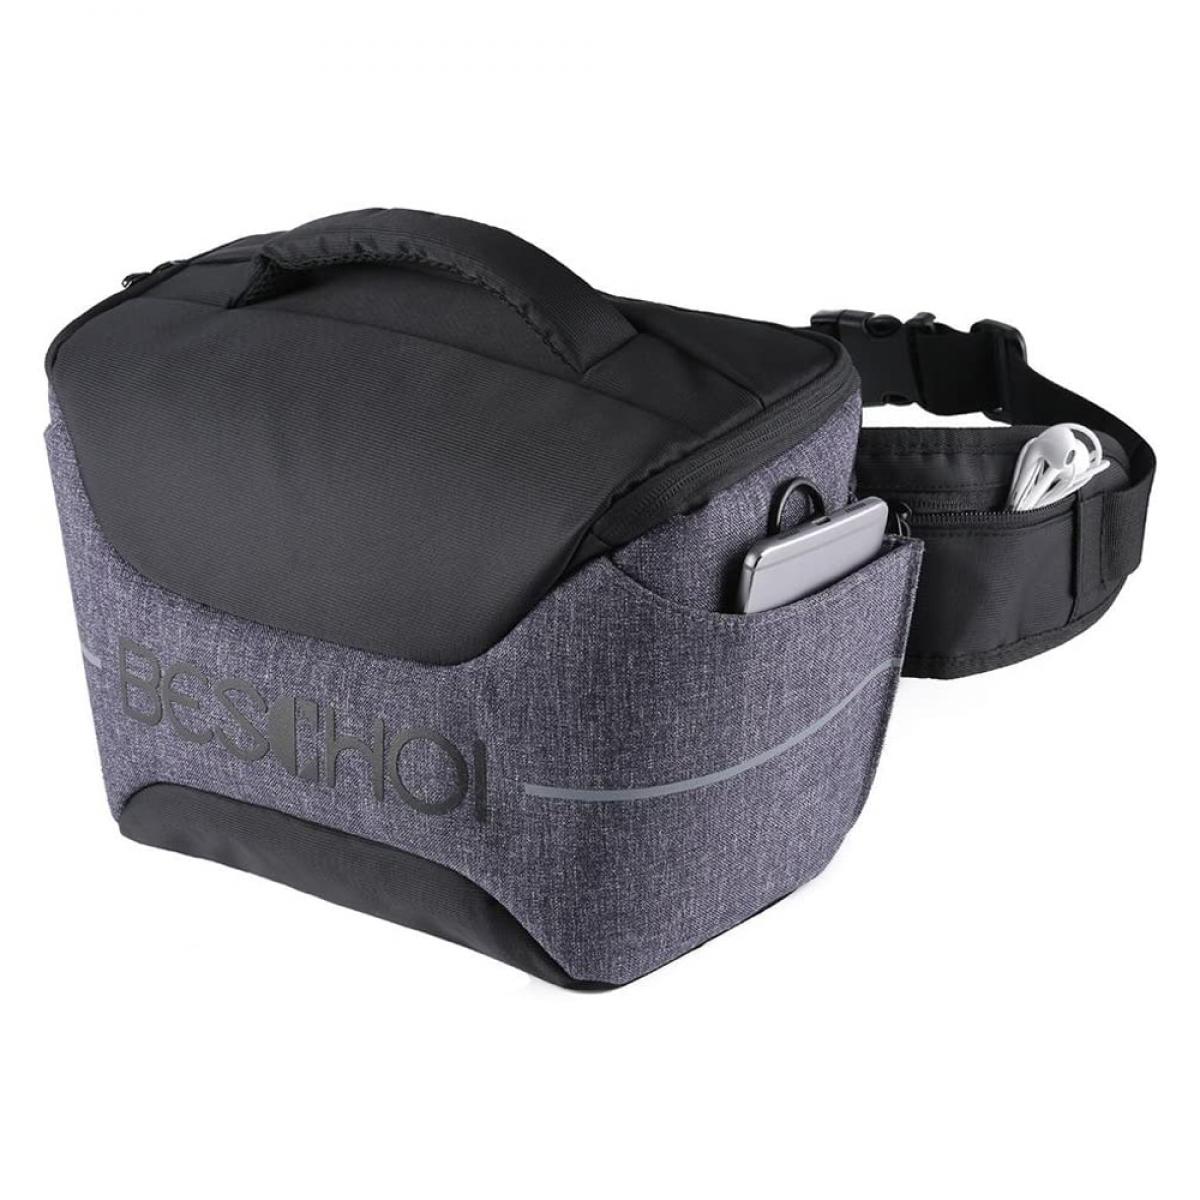 Compact Camera Bag with Rain Cover for DSLR SLR Camera - KENTFAITH